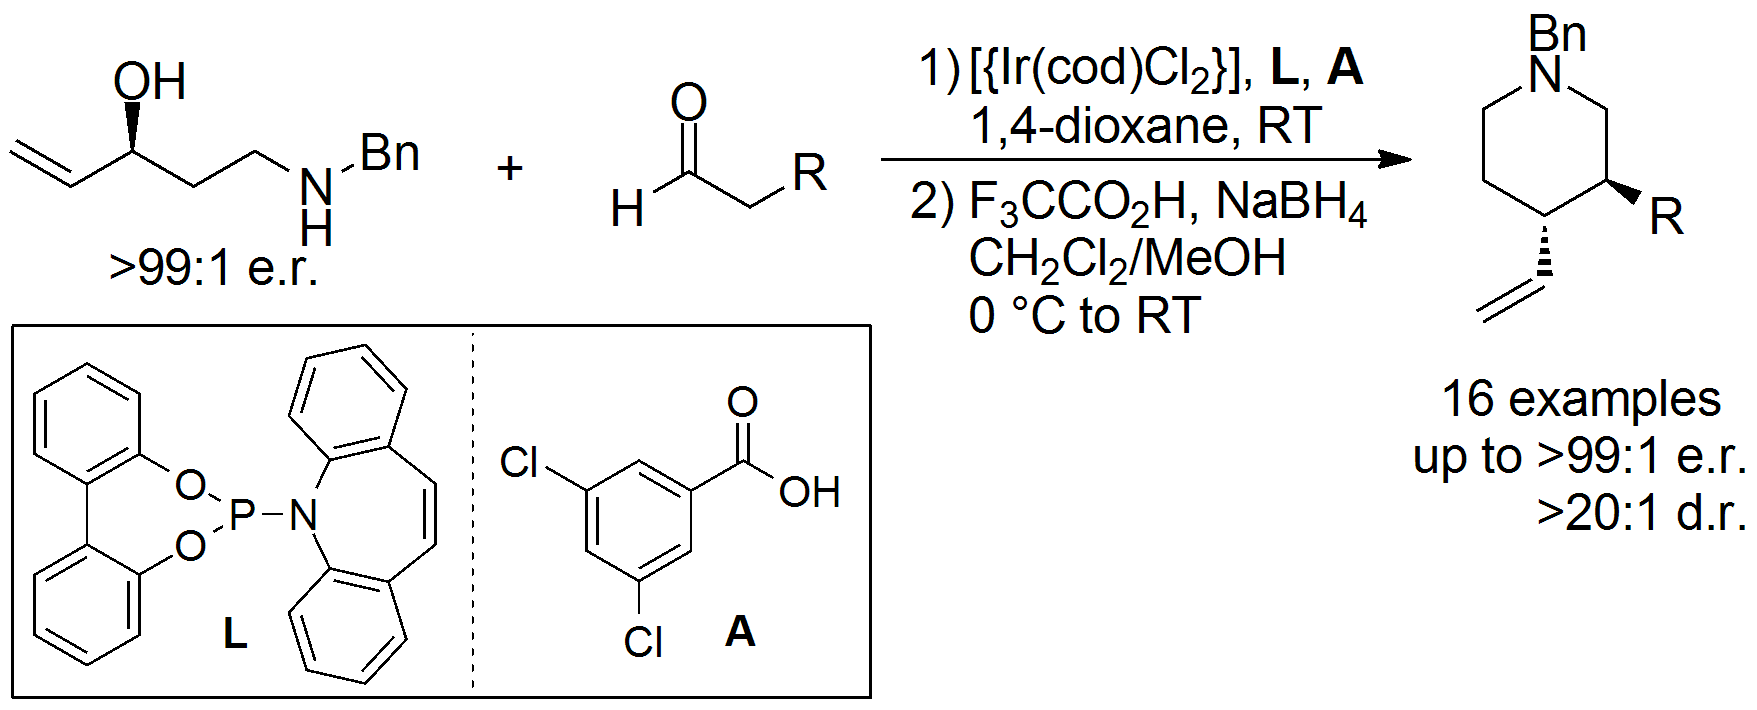 Stereoselective Synthesis of Piperidines via Iridium-Catalyzed Cyclocondensation  T. Sandmeier, S.Krautwald, E.M. Carreira, Angew. Chem. Int. Ed. 2017